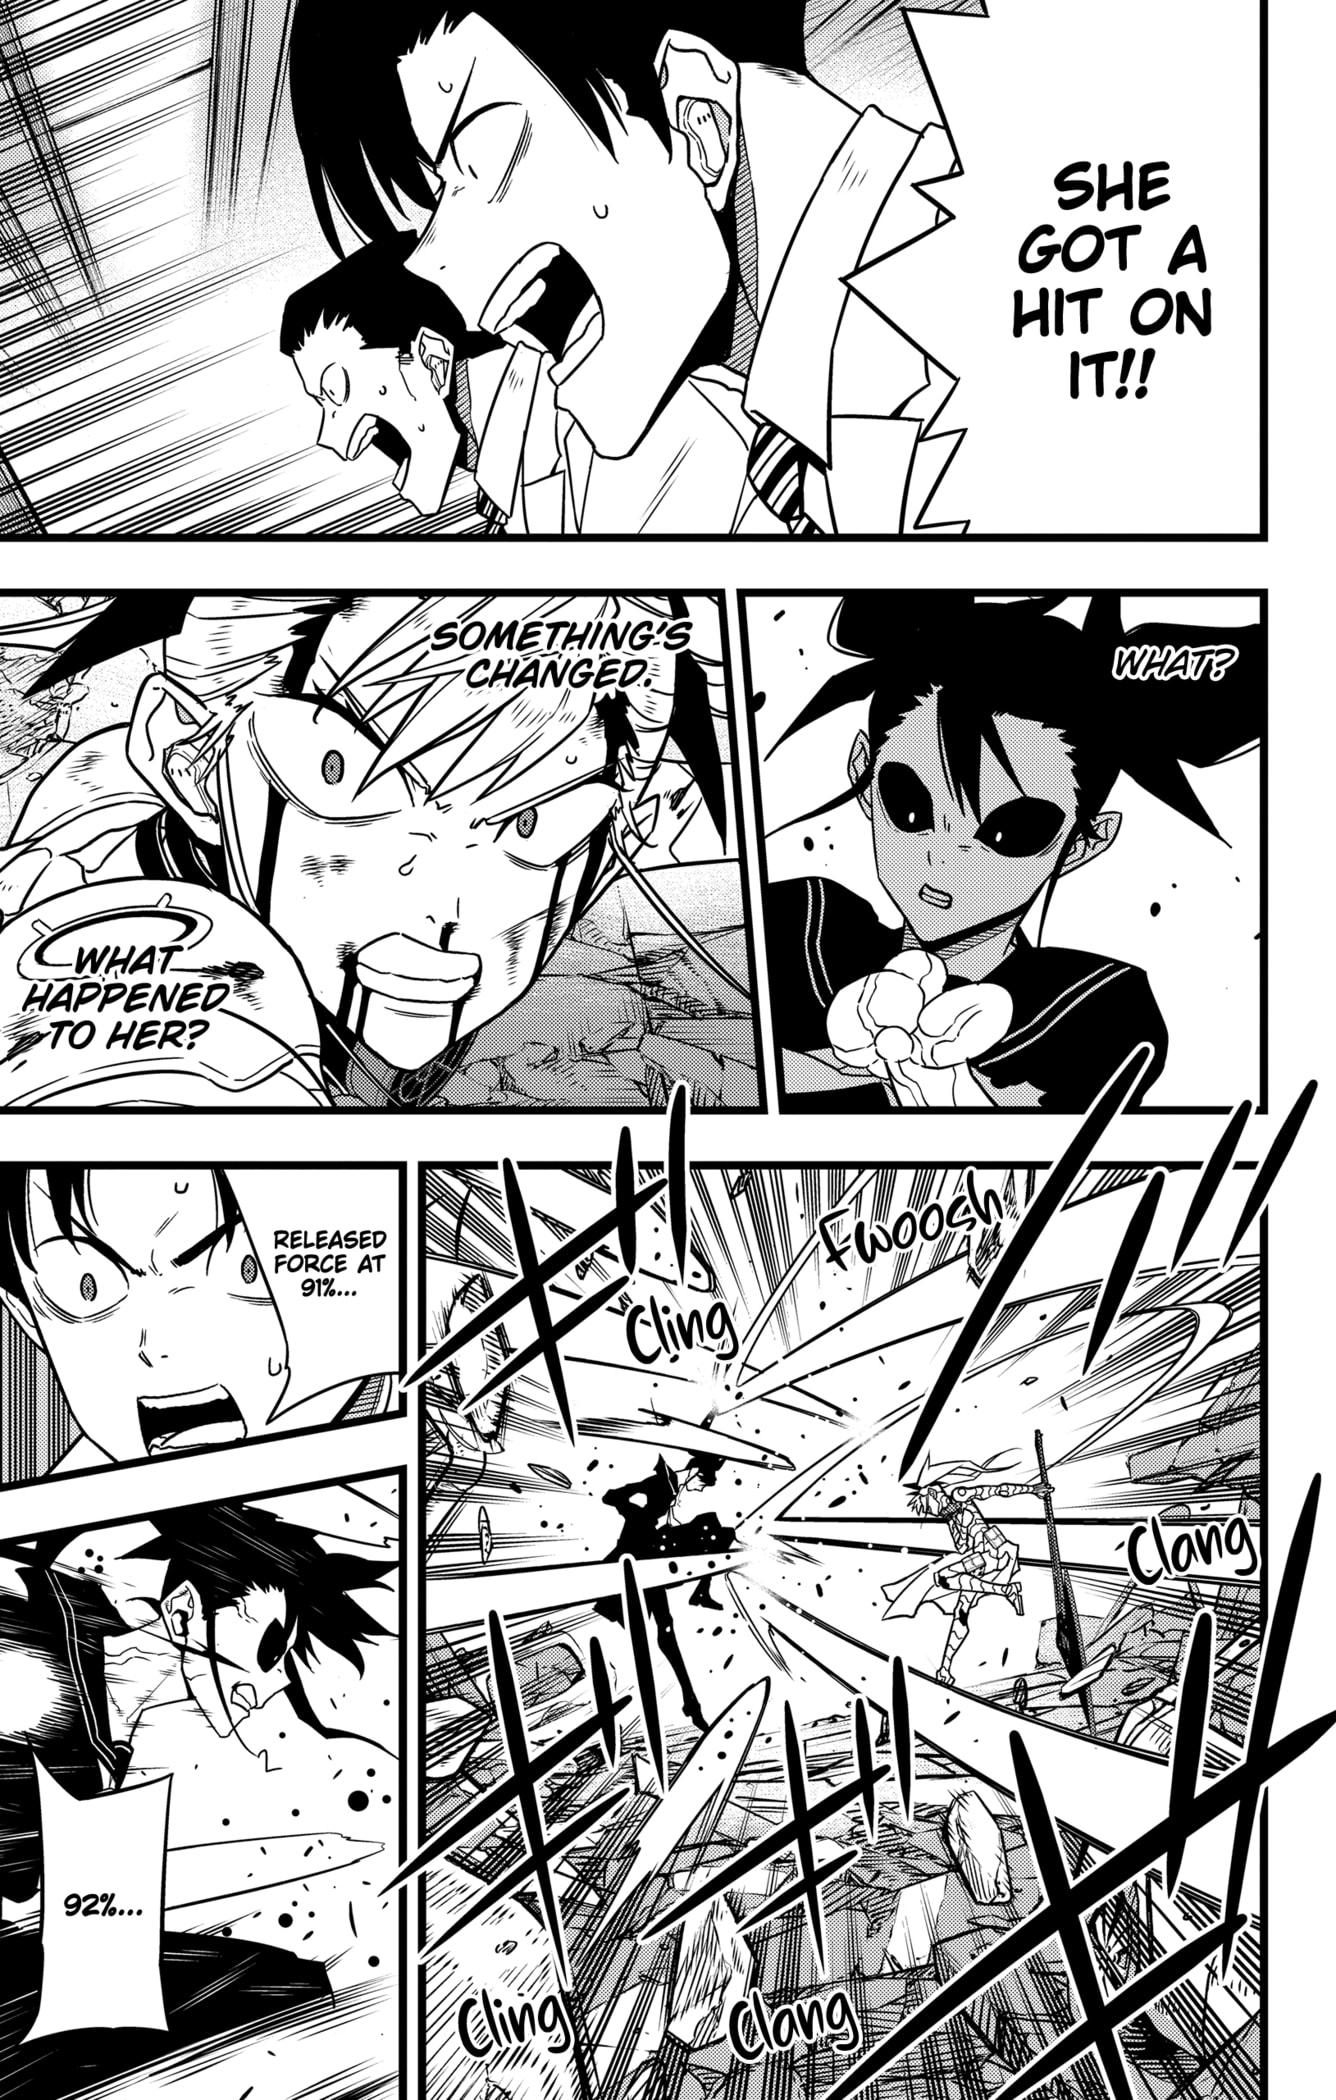 Kaiju No. 8 Chapter 80 page 3 - Mangakakalot